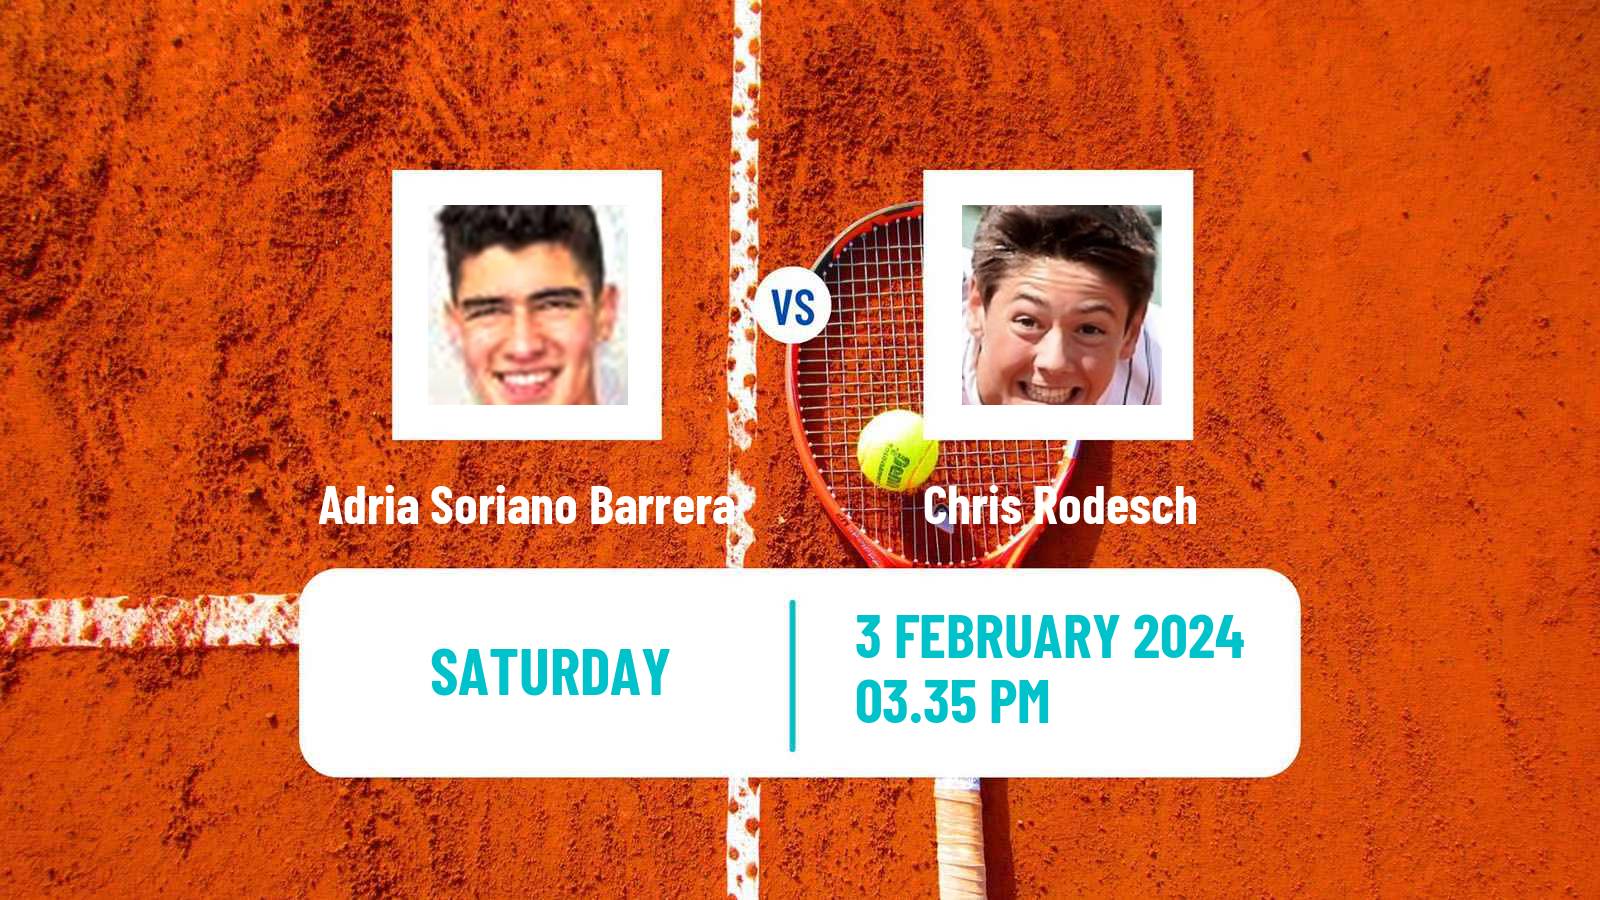 Tennis Davis Cup World Group I Adria Soriano Barrera - Chris Rodesch